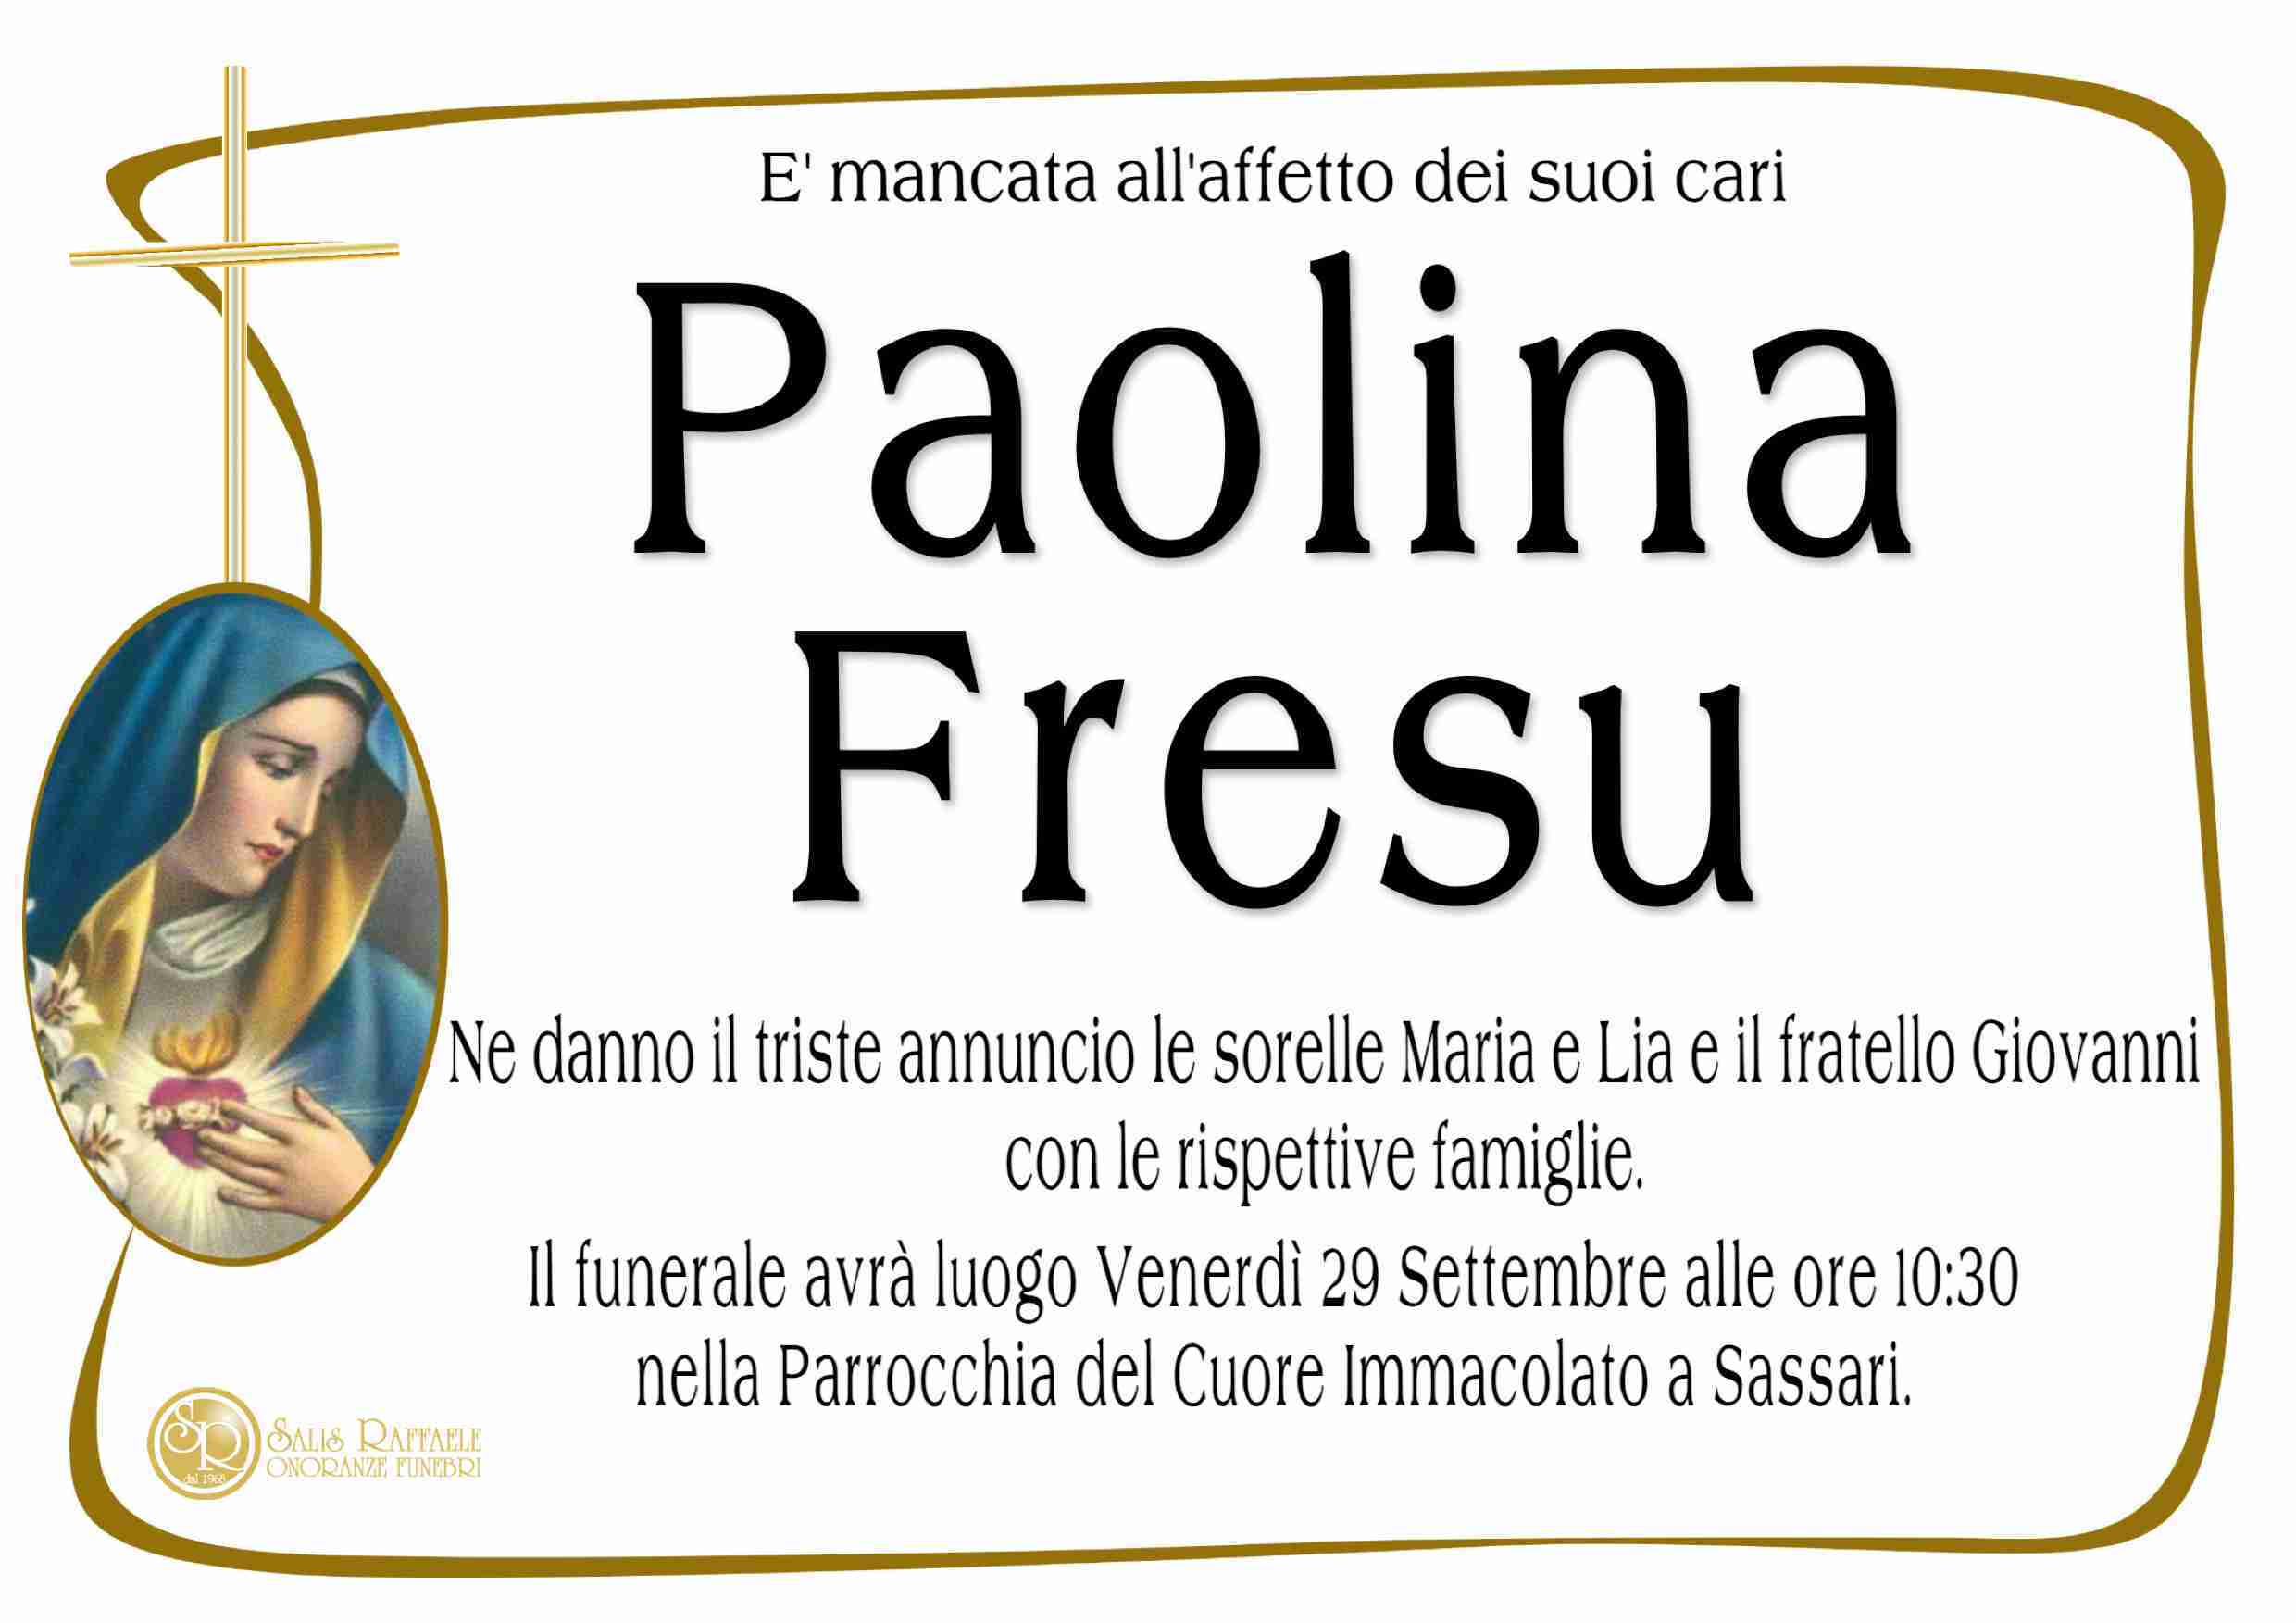 Paolina Fresu